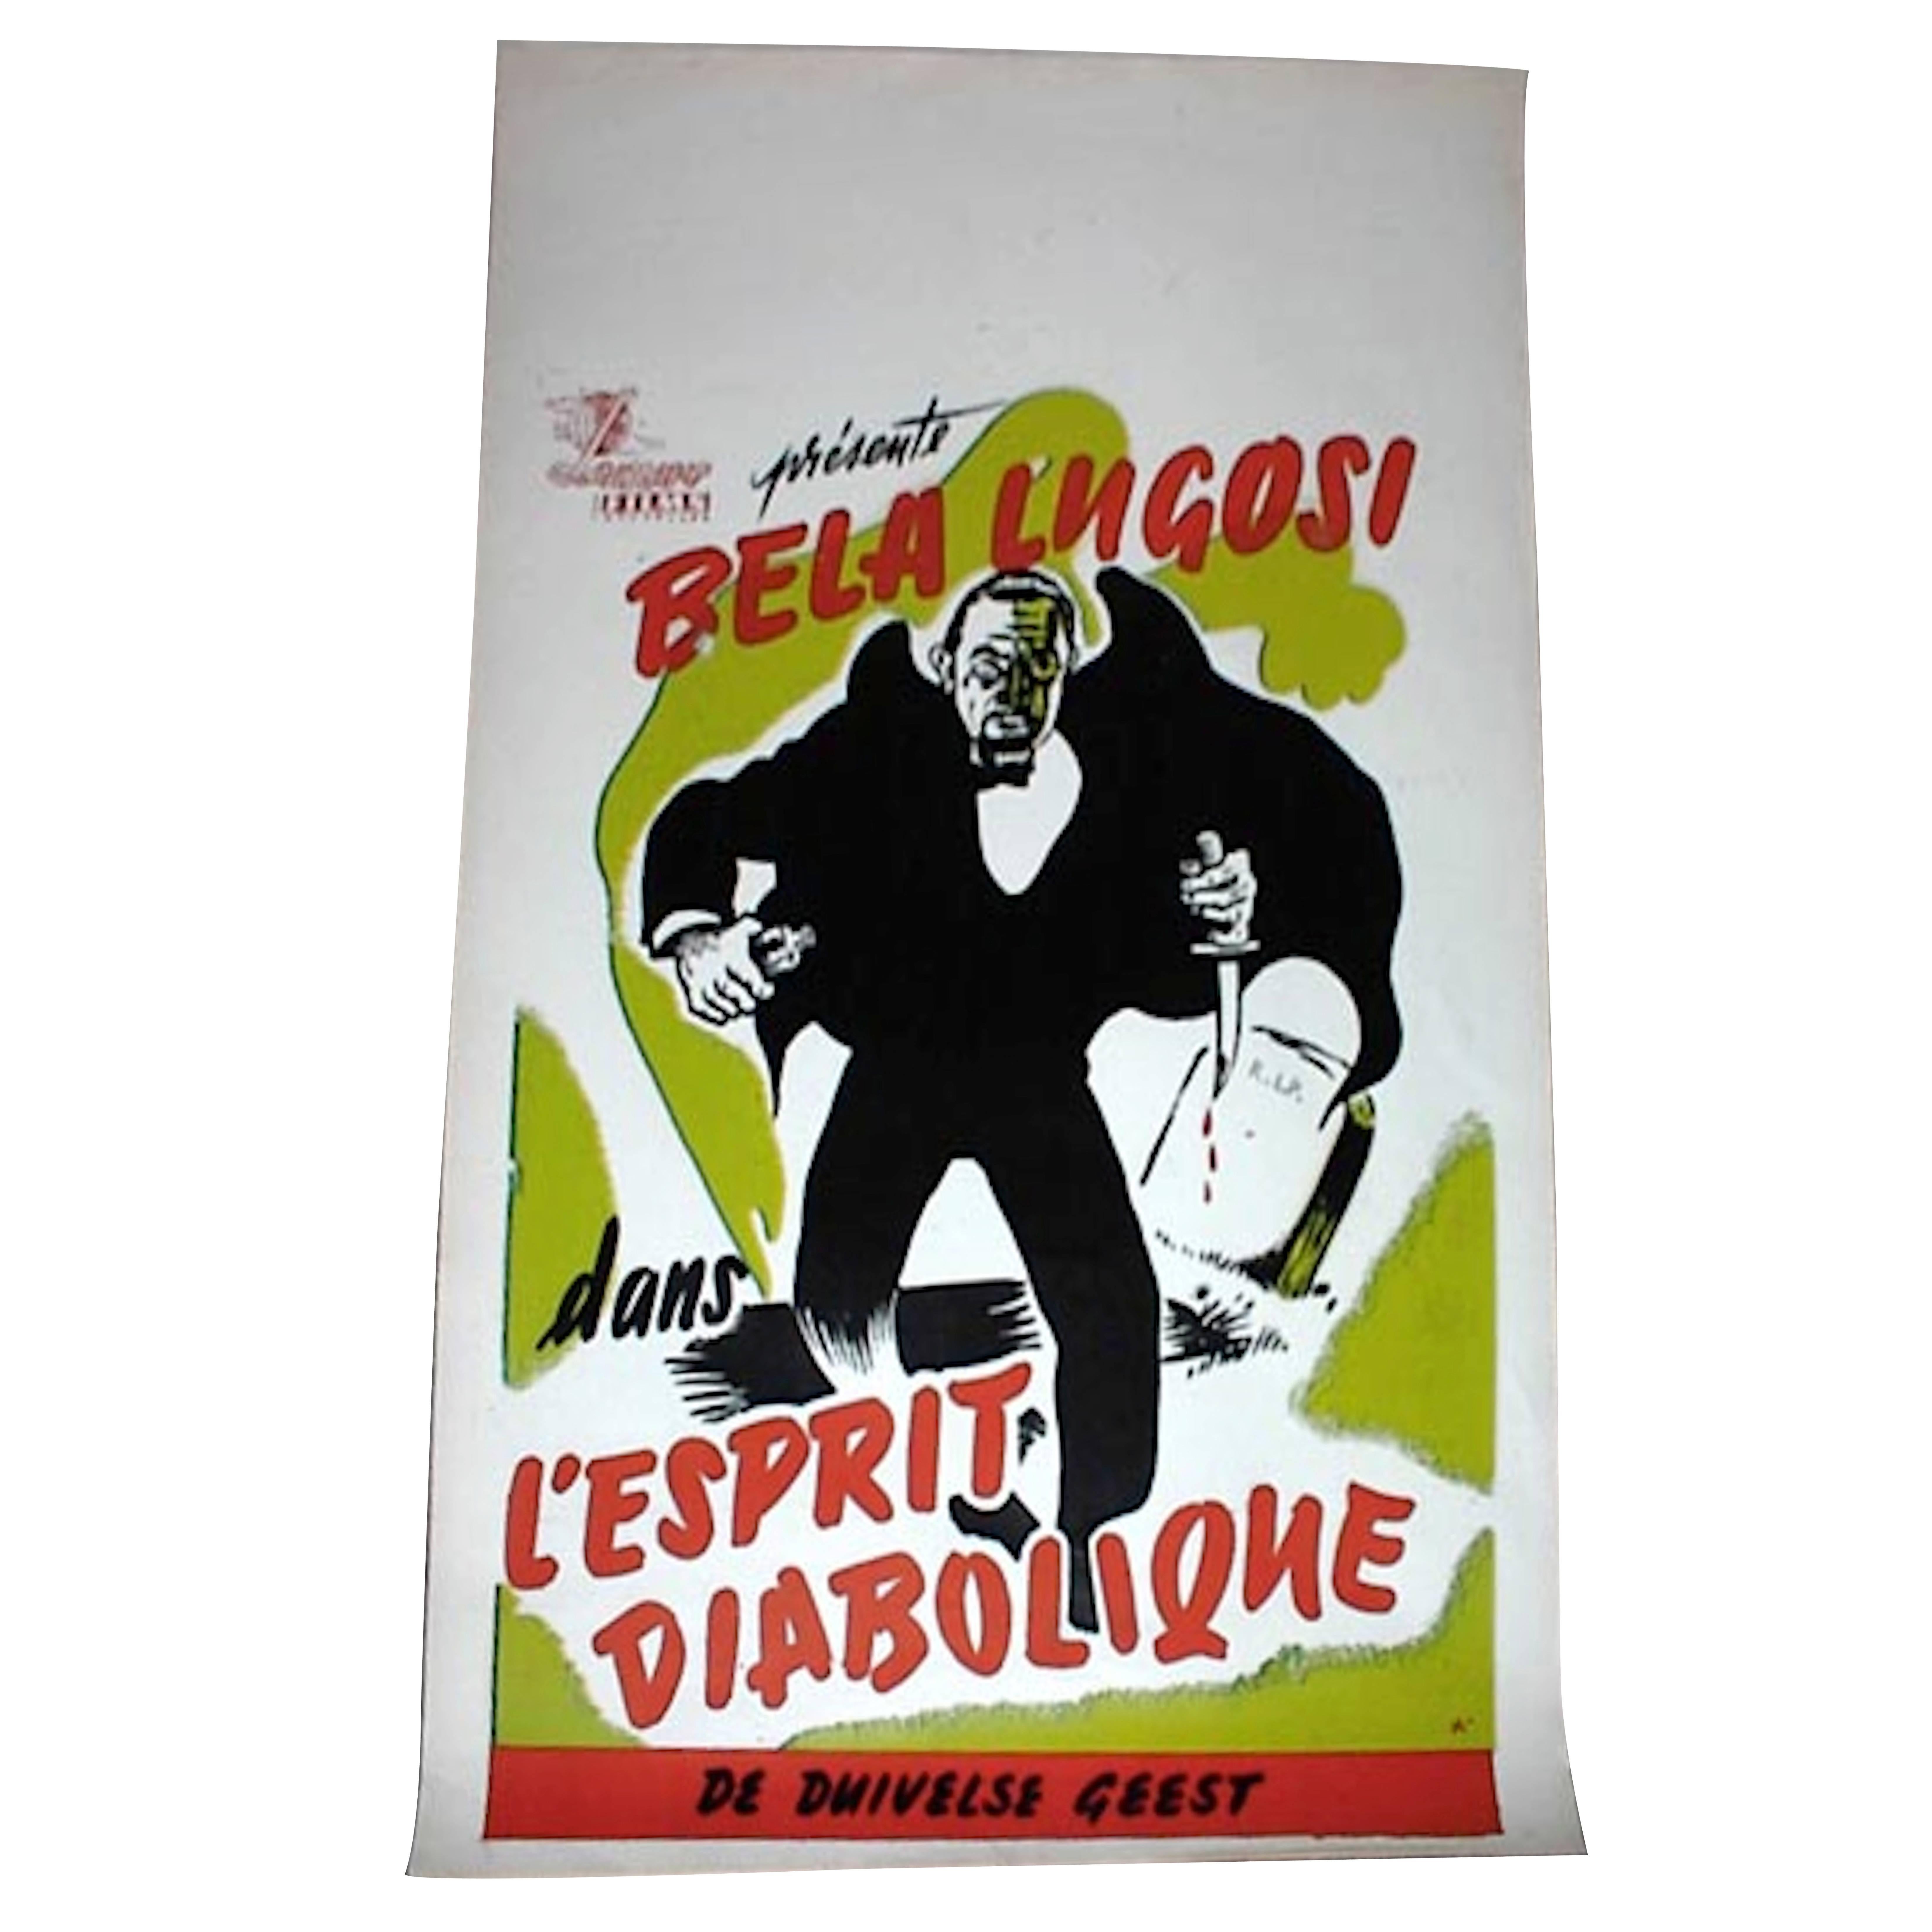 "Voodoo Man" Bela Lugosi Movie Poster Belgian Release, circa 1944 For Sale